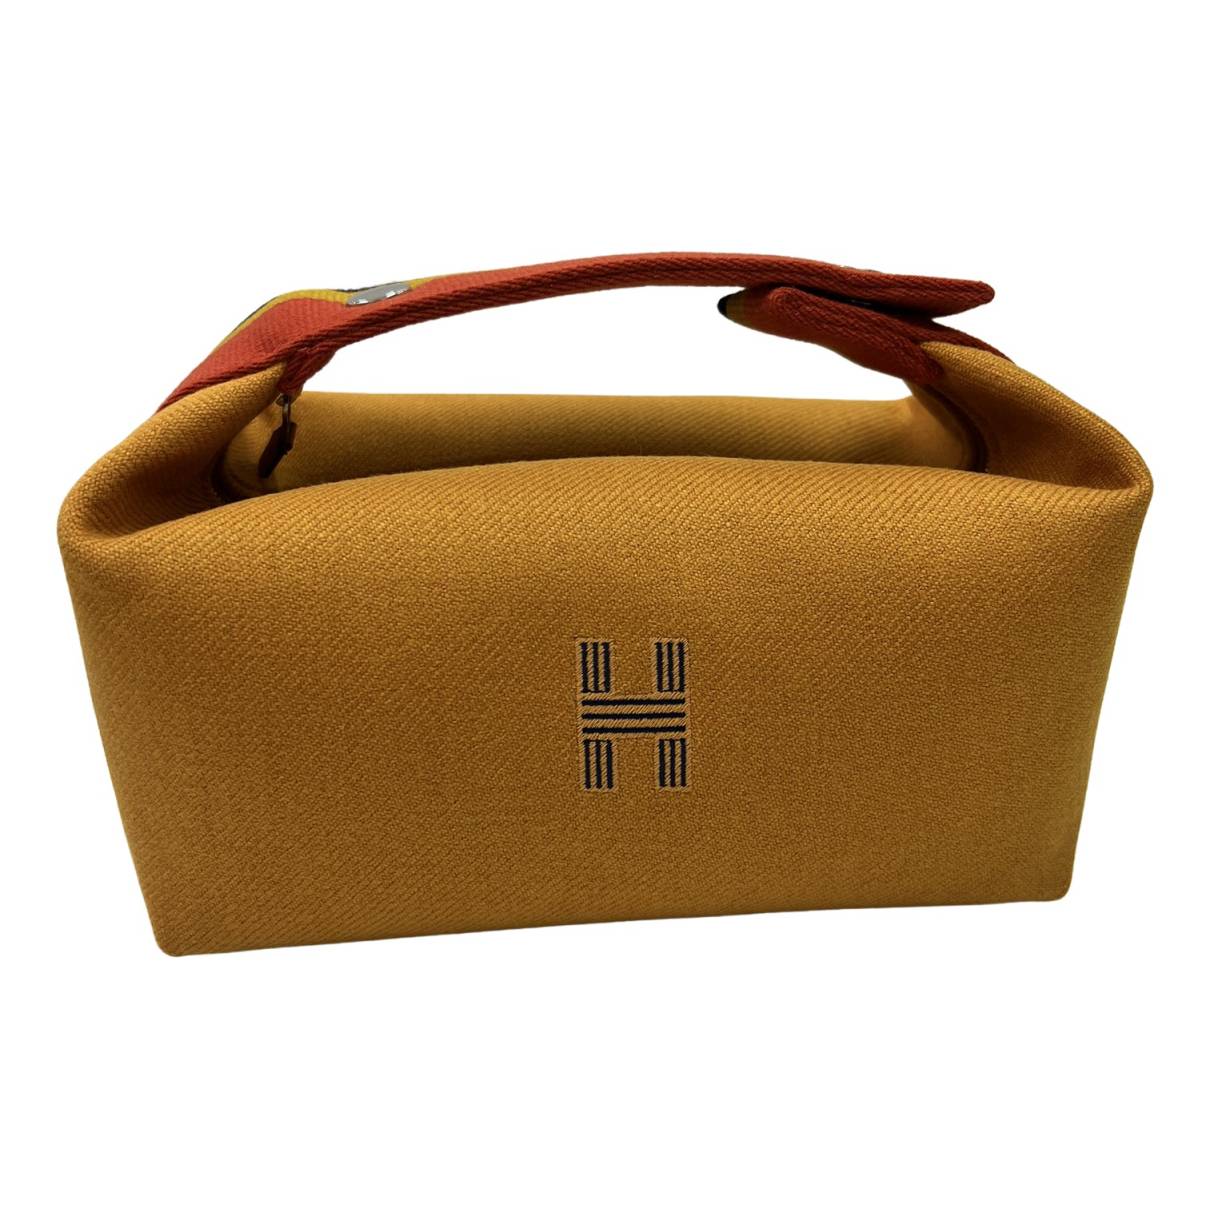 MULTIPLE WAYS TO WEAR HERMES BRIDE A BRAC BAG  Six ways to wear Hermes  bride a brac bag 